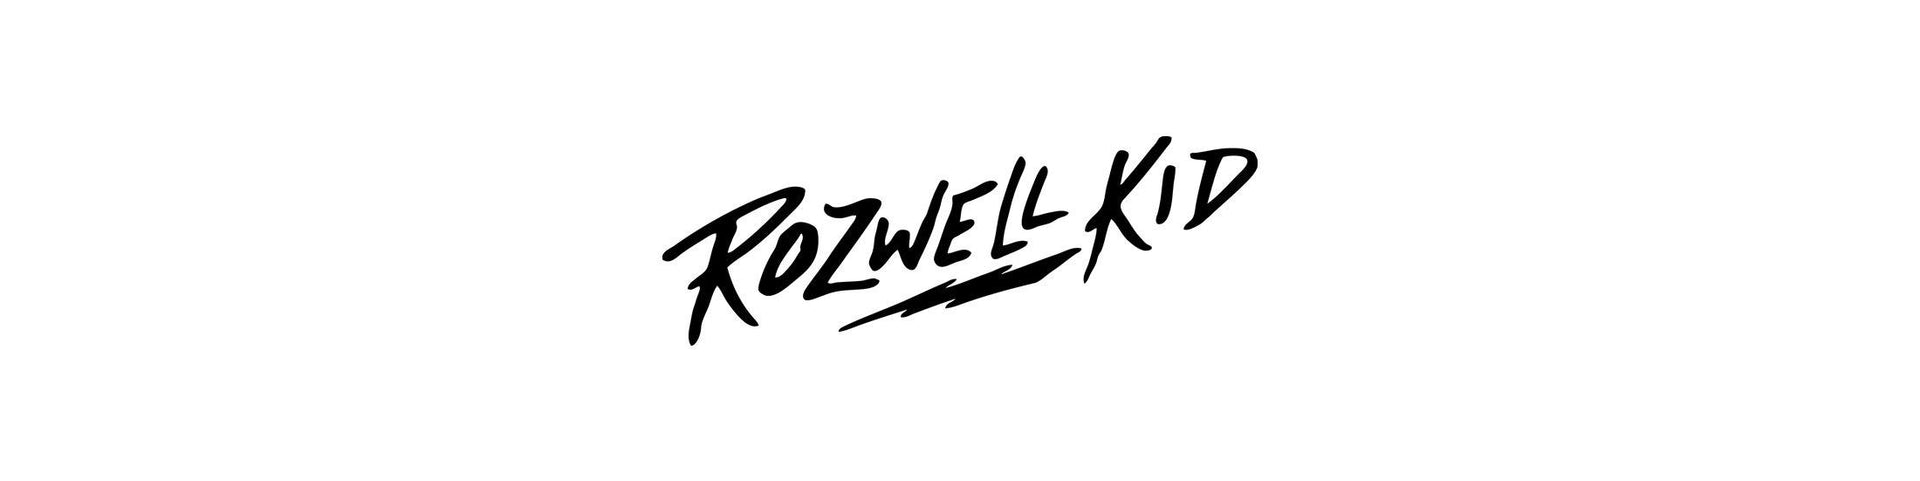 Shop – Rozwell Kid – Band & Music Merch – Cold Cuts Merch